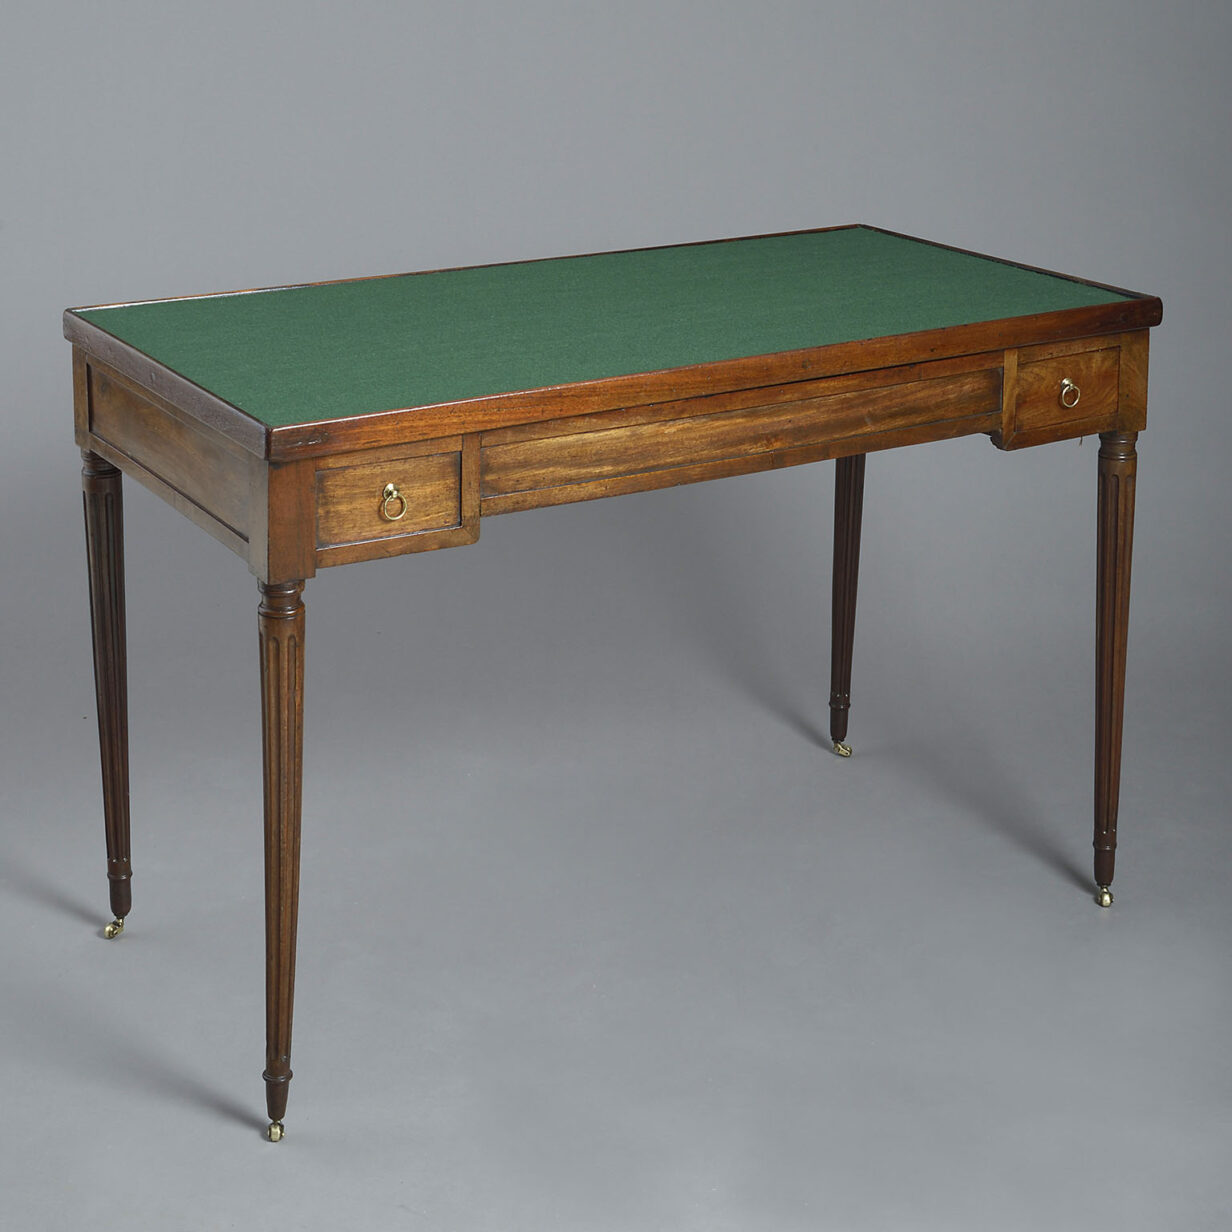 Late 18th century louis xvi period tric trac table